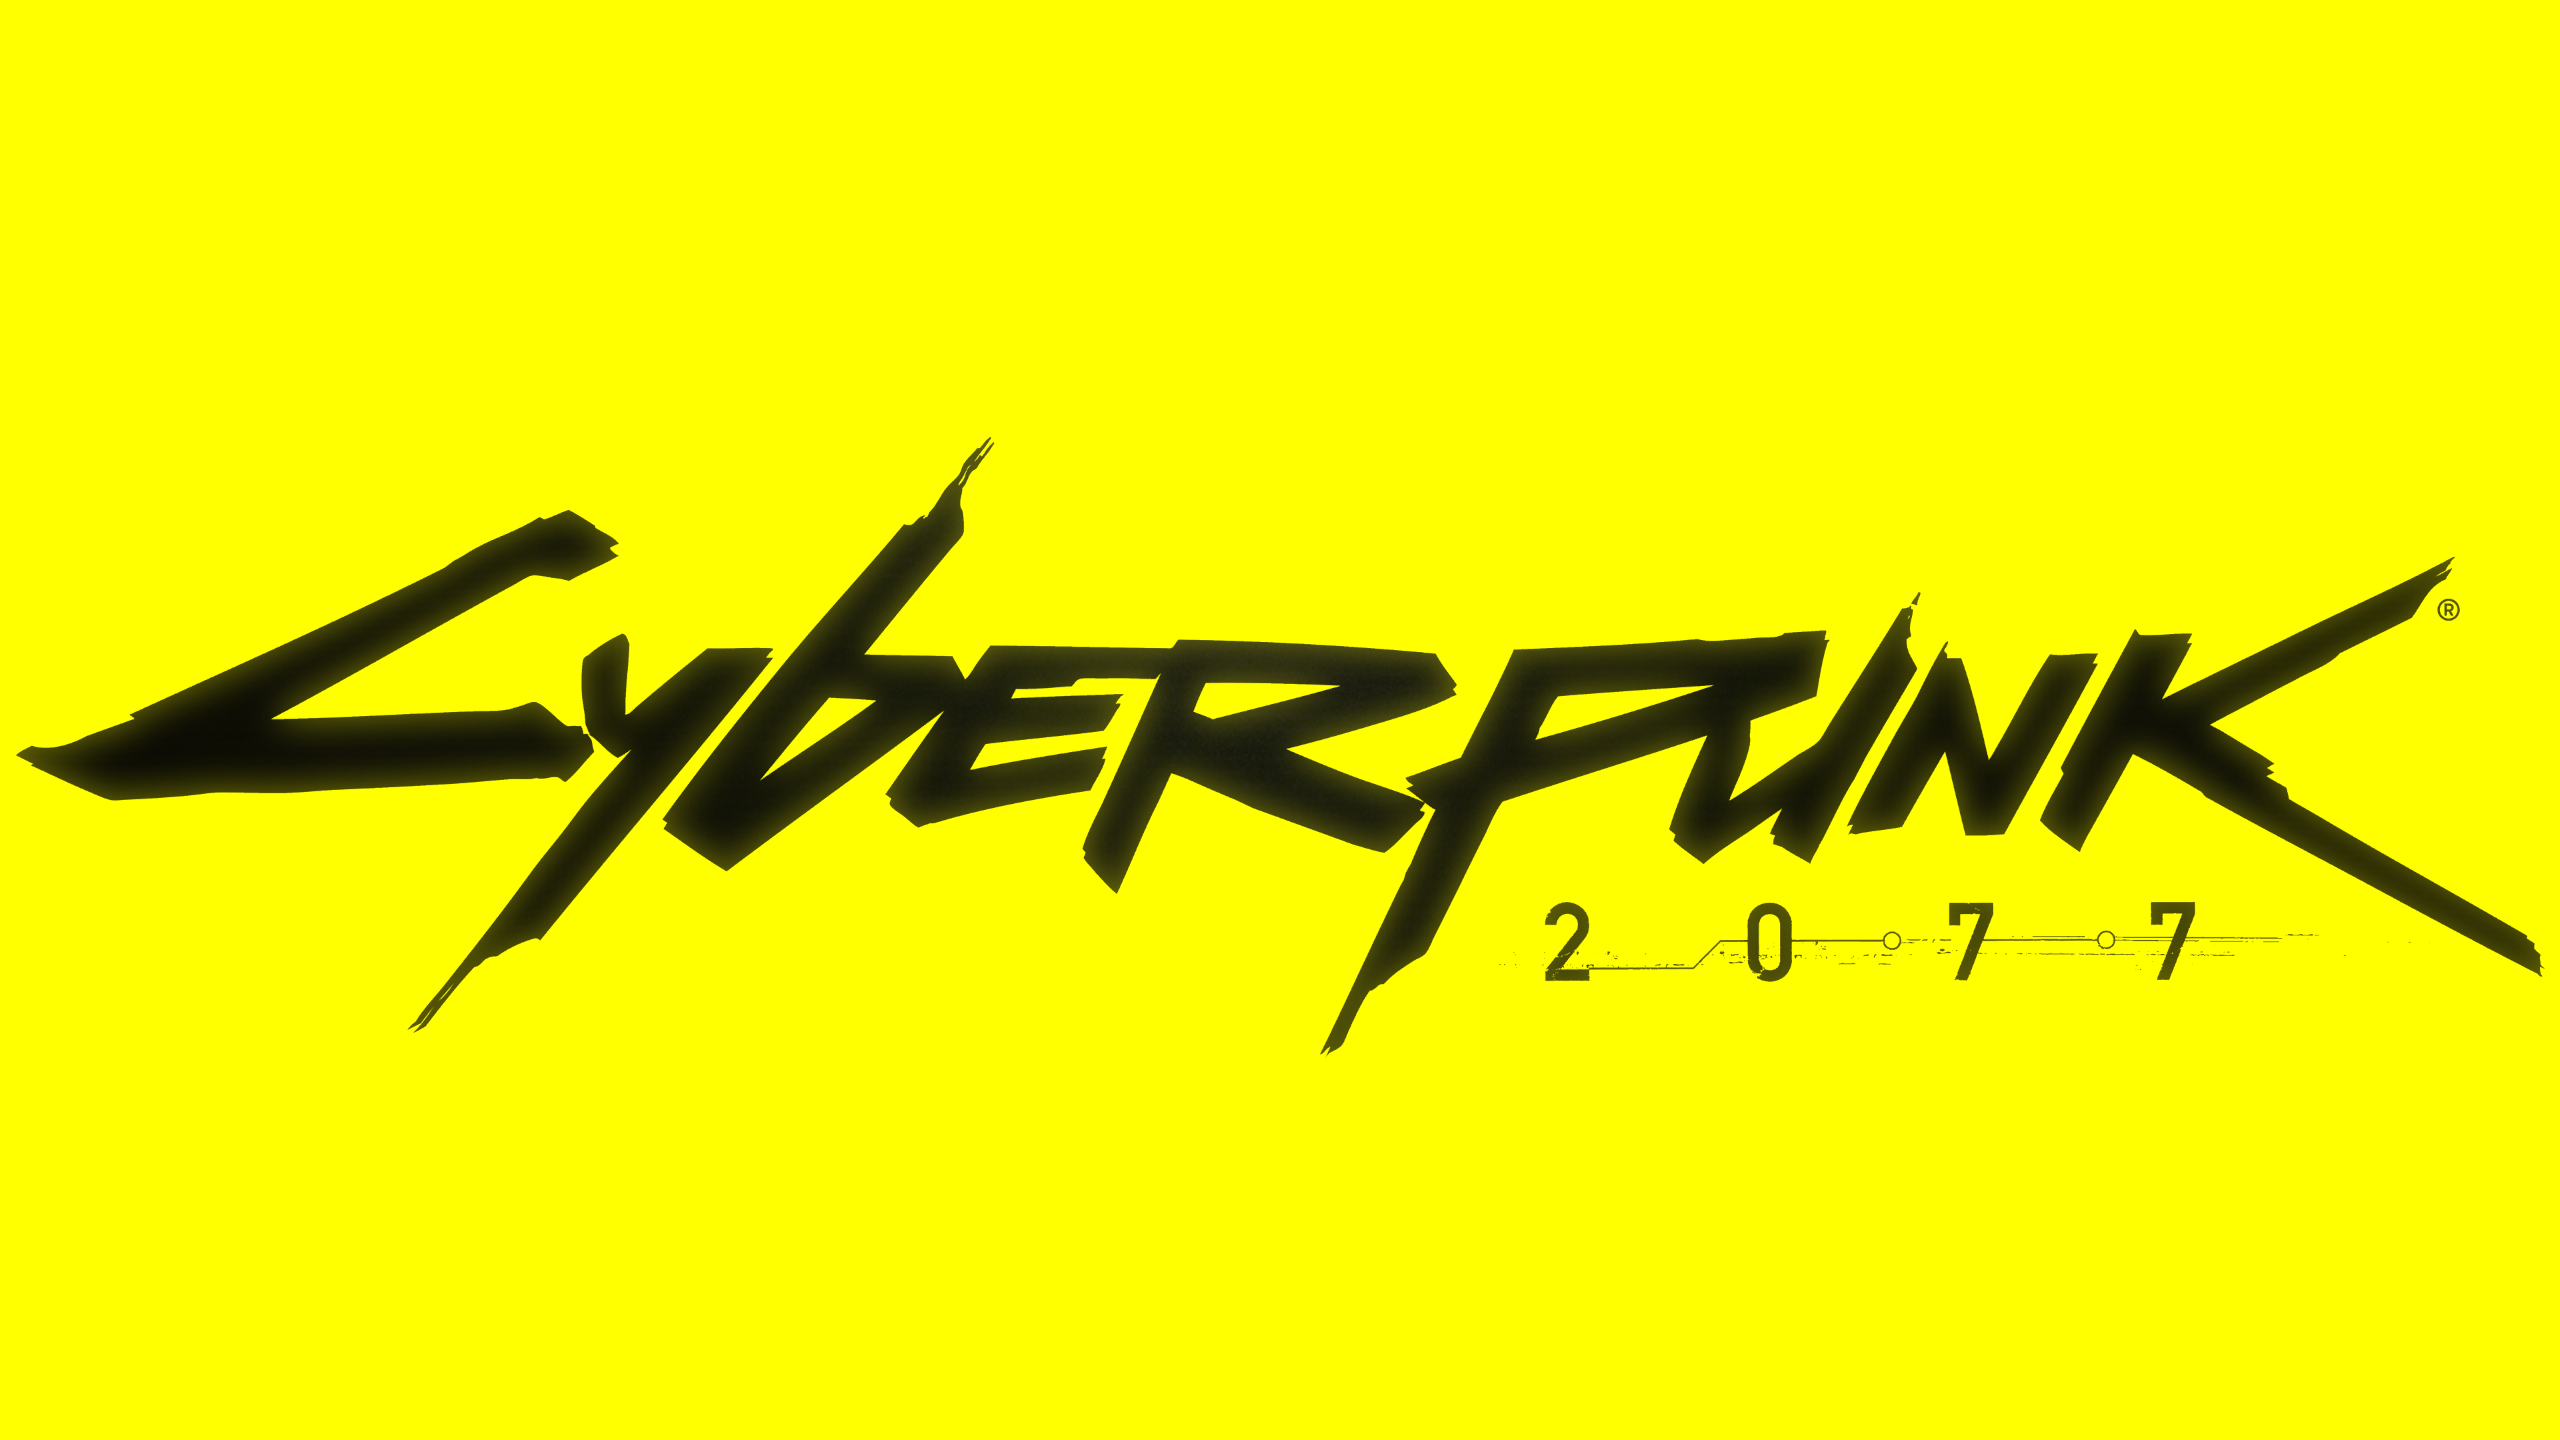 Cyberpunk logo after effects фото 102